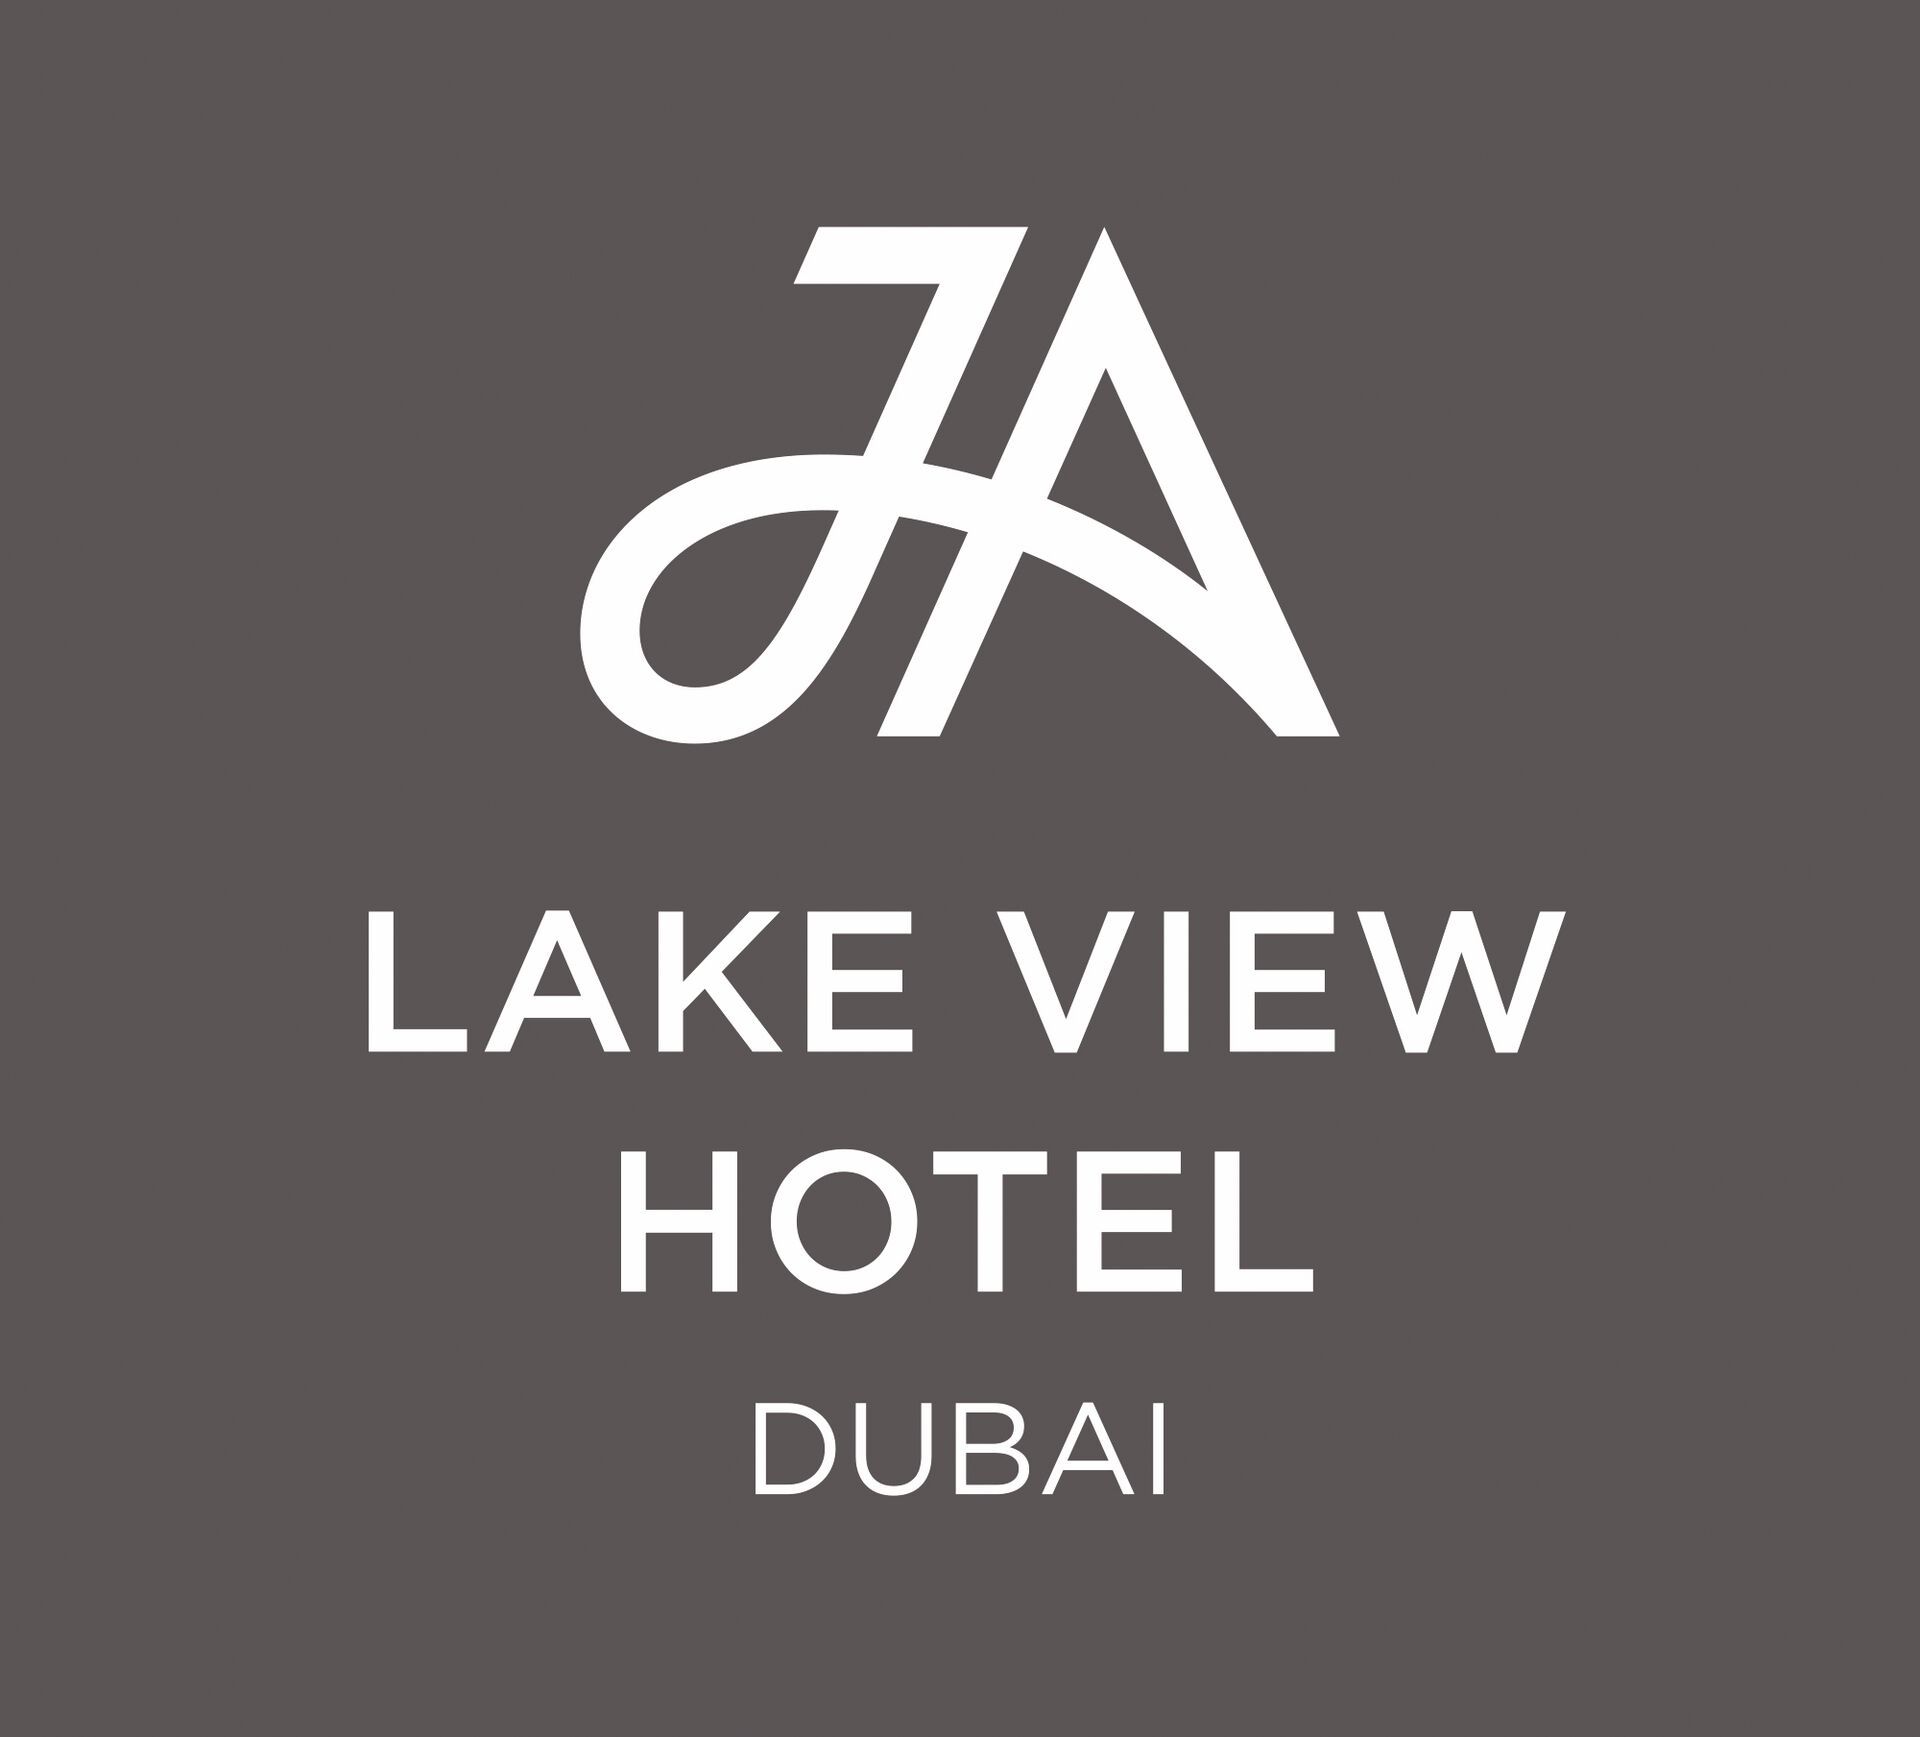 Emirats Arabes Unis - Dubaï - JA The Resort - JA Lake View Hôtel 5*